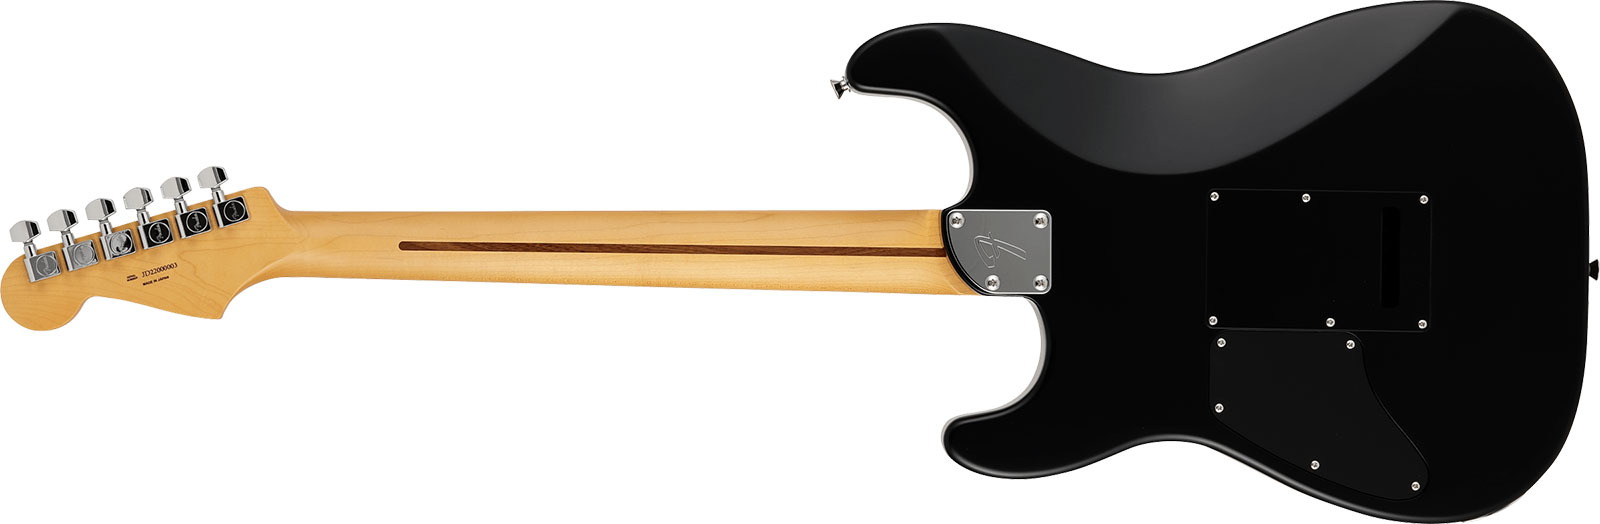 Fender Strat Elemental Mij Jap 2h Trem Rw - Stone Black - Elektrische gitaar in Str-vorm - Variation 1